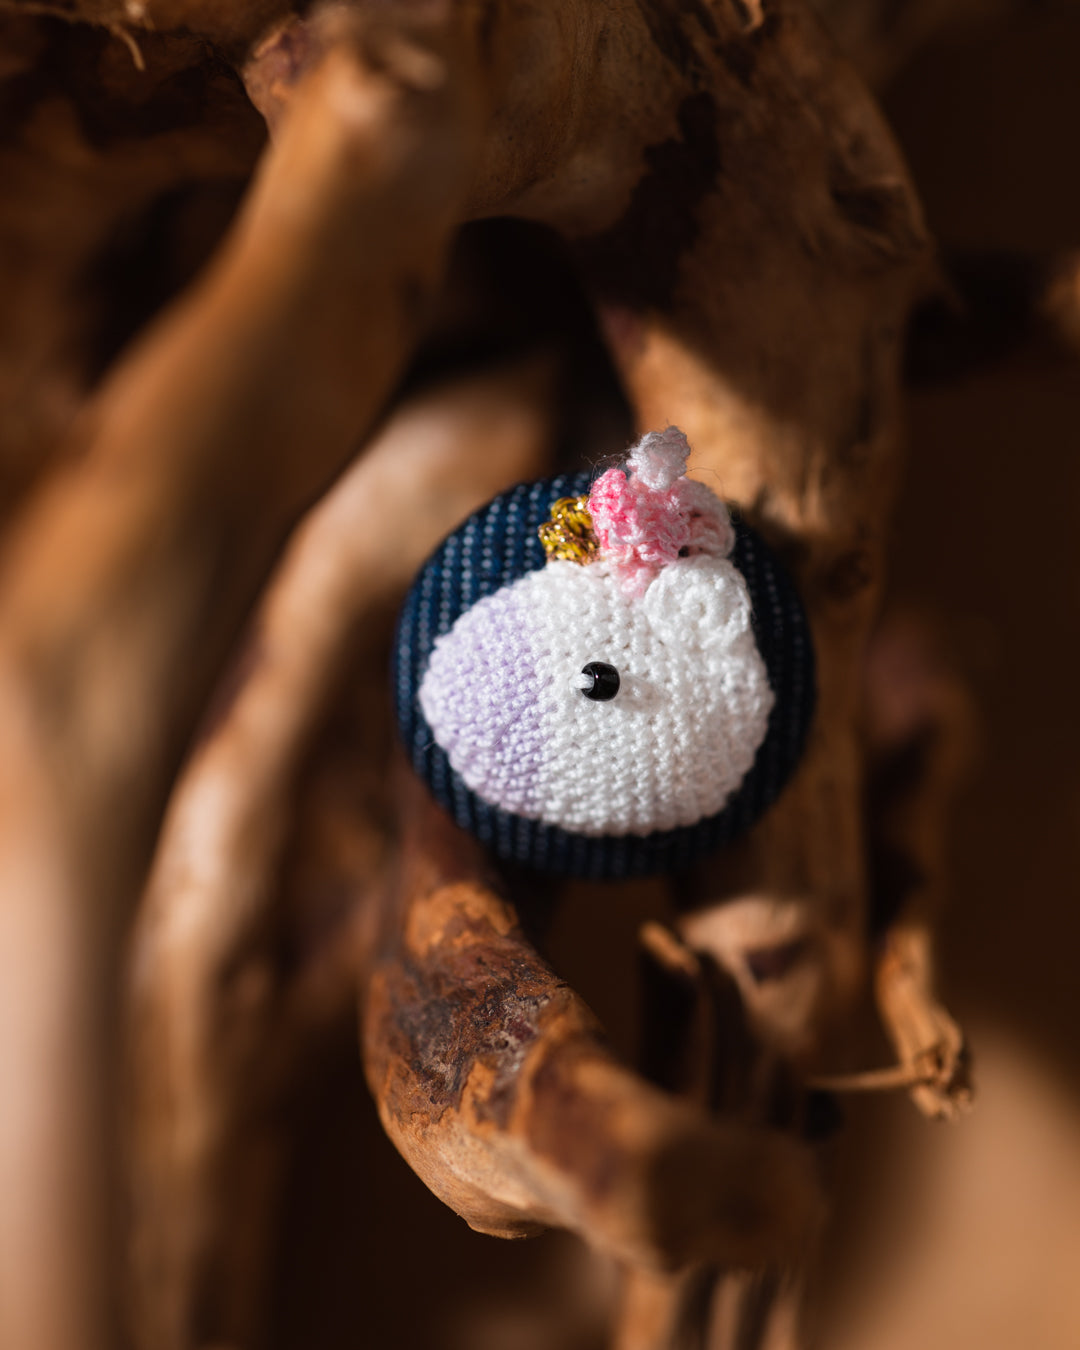 tiny rabbit hole brooch lace crochet earring floral unicorn amigurumi micro handmade singapore craft handcrafted 